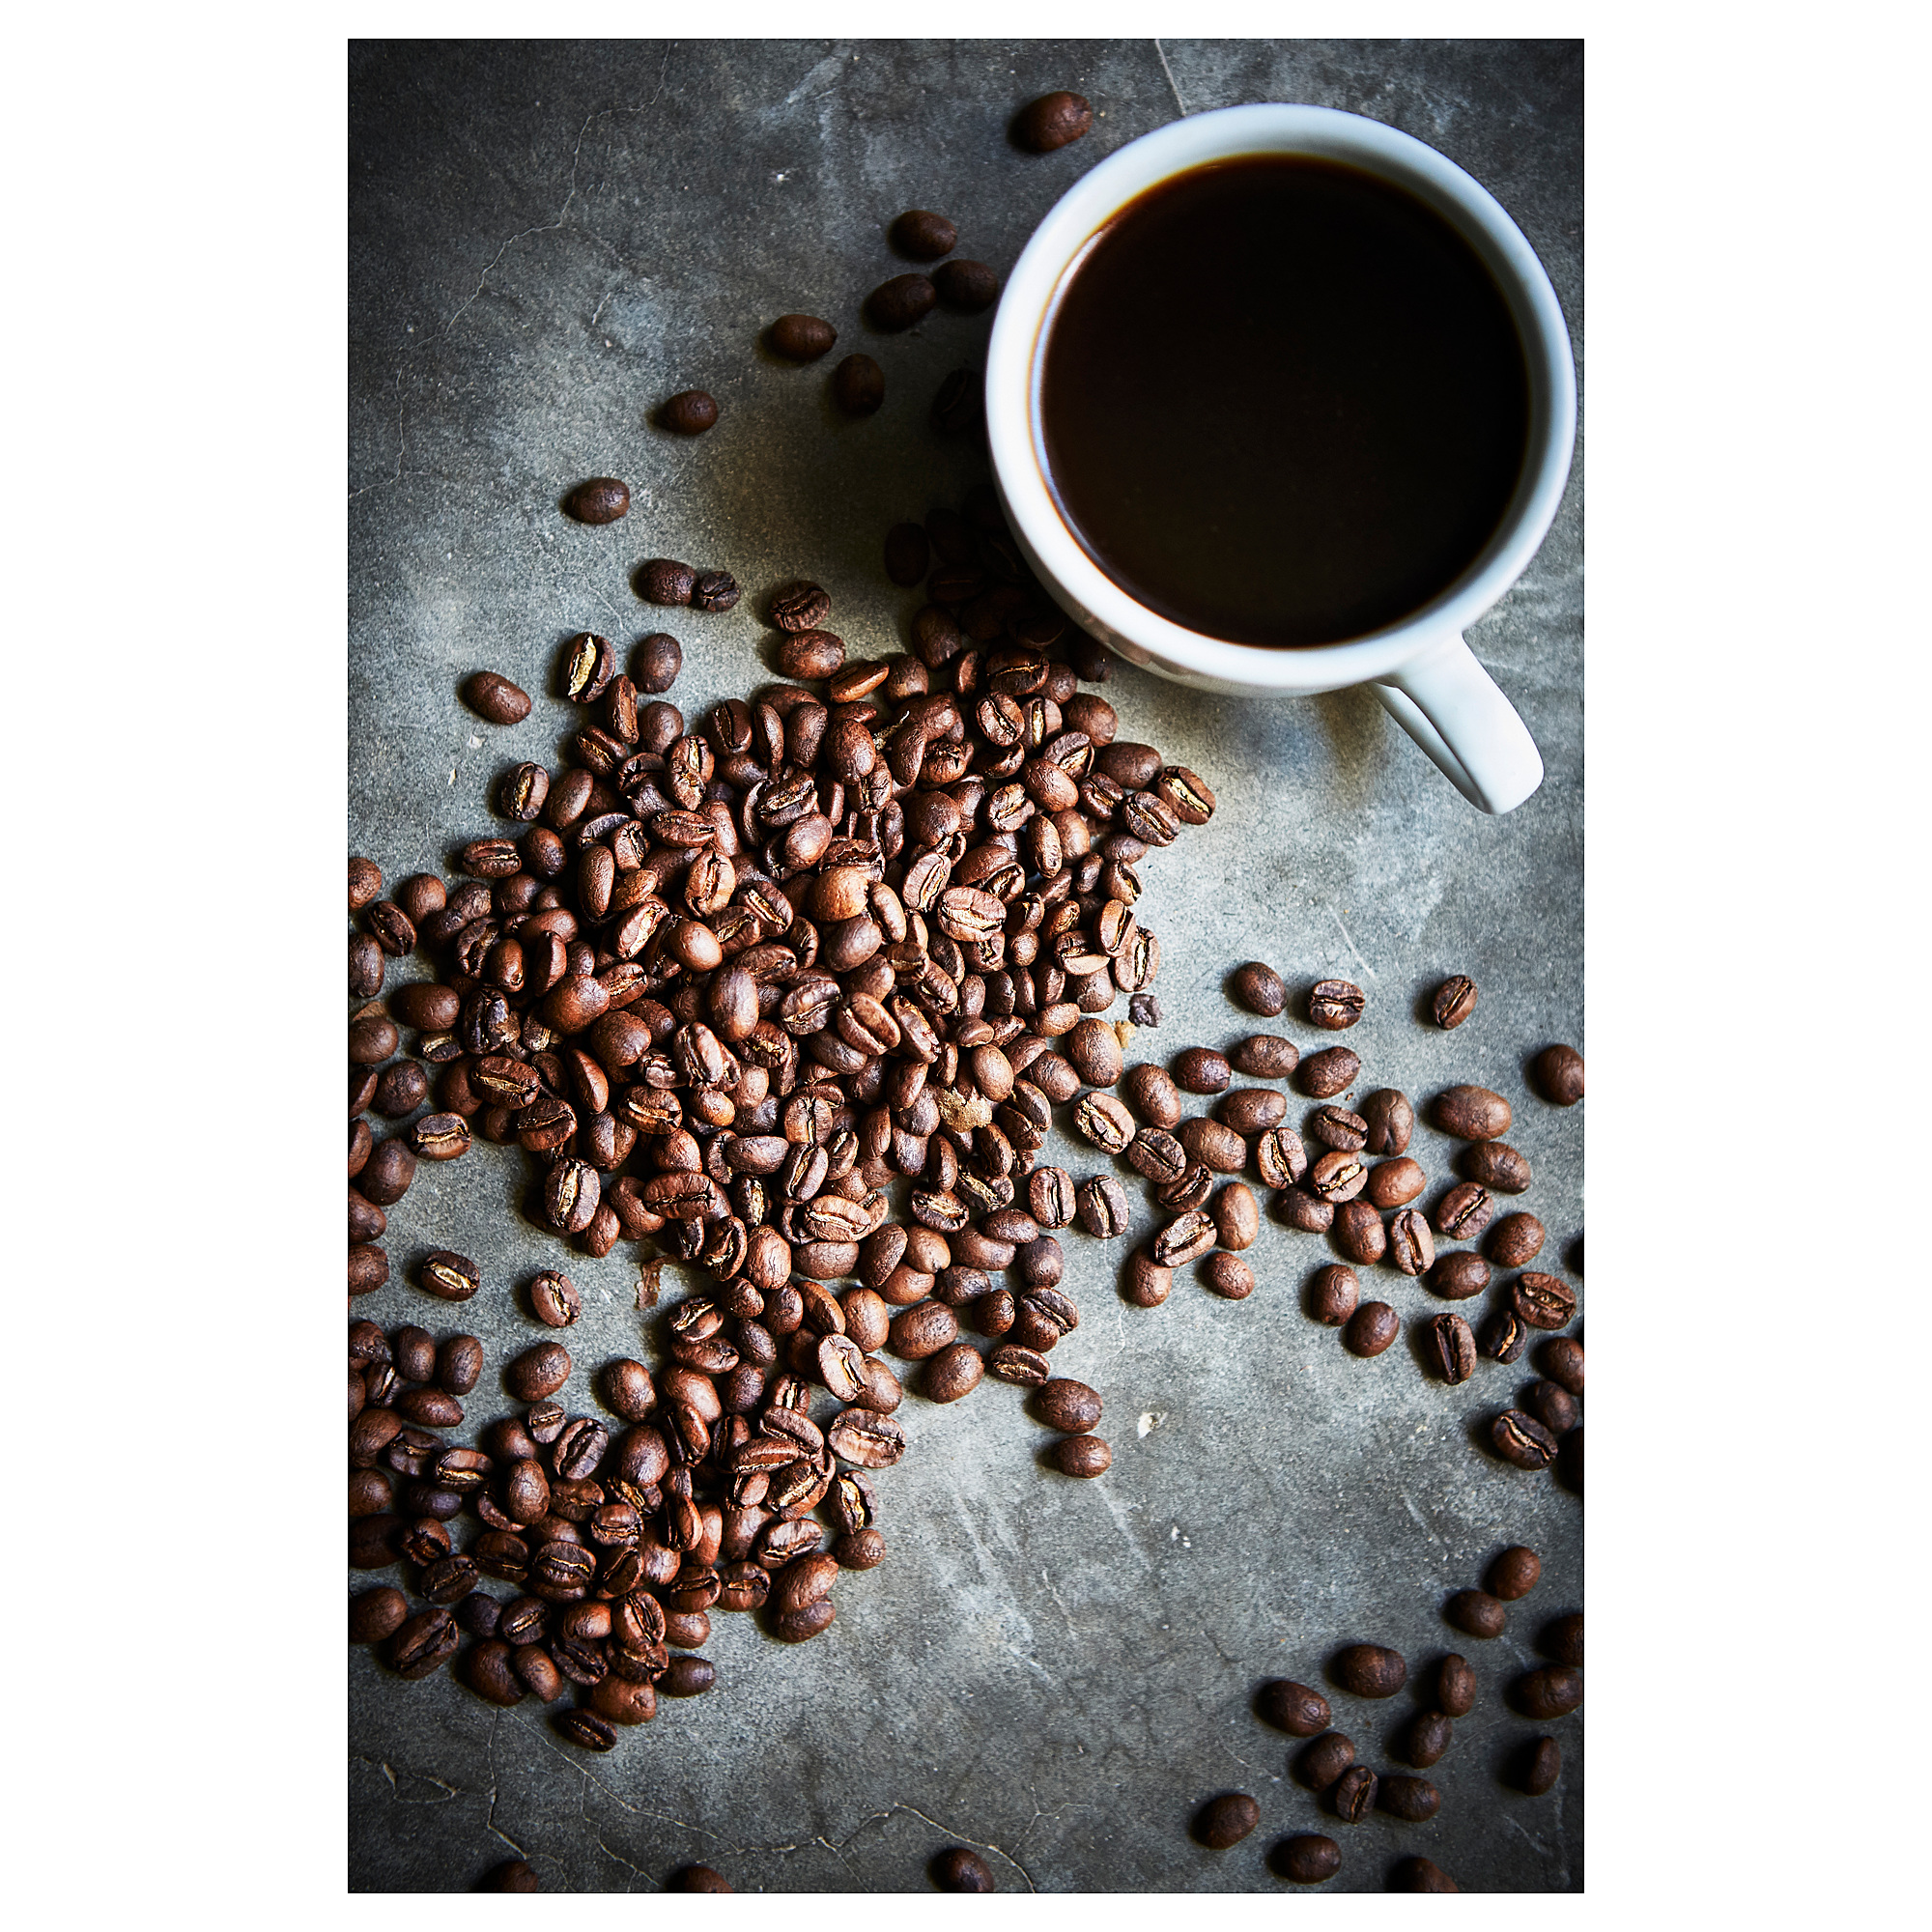 PÅTÅR signature coffee, beans